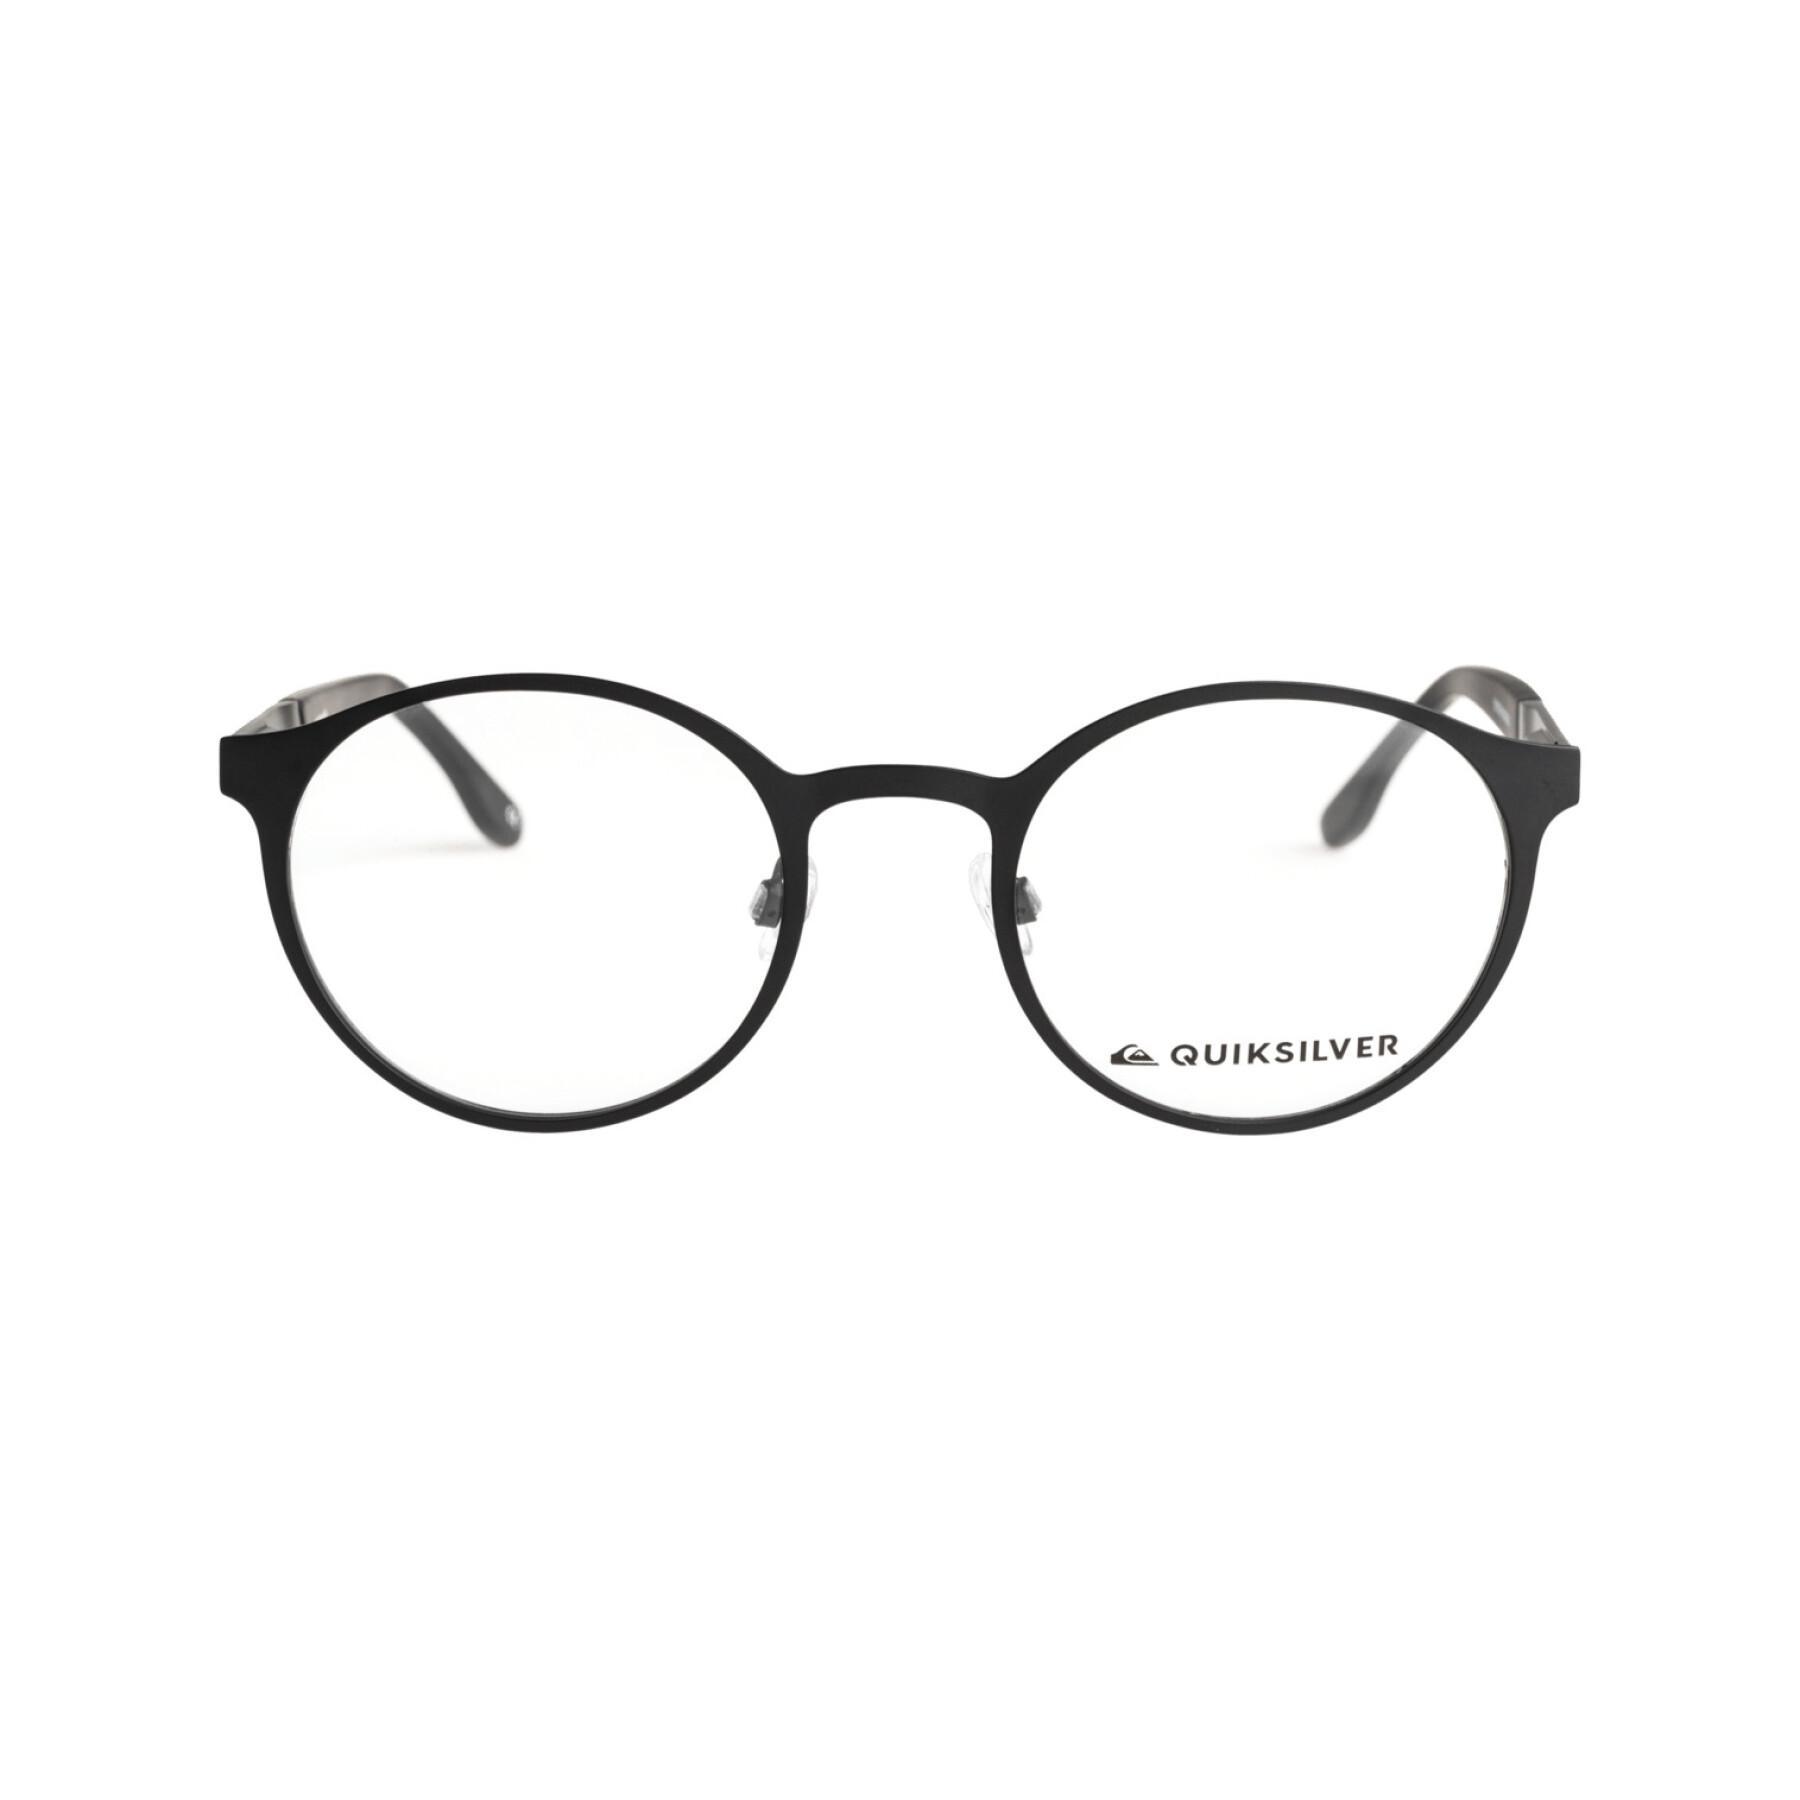 Eyeglasses Quiksilver I-Round - Fashion Accessories - Accessories